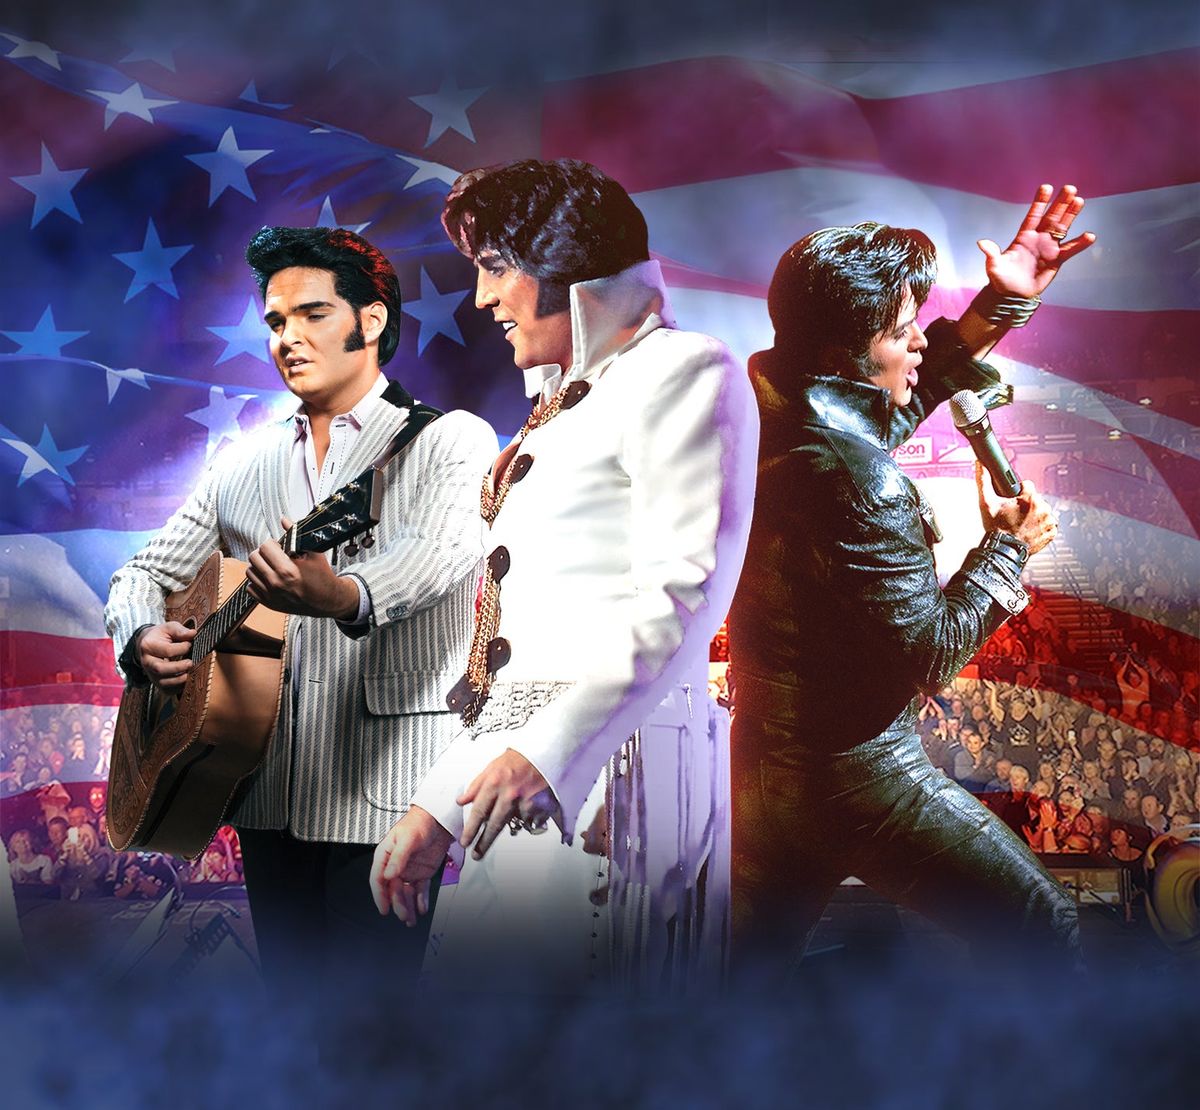 The Elvis World Tour